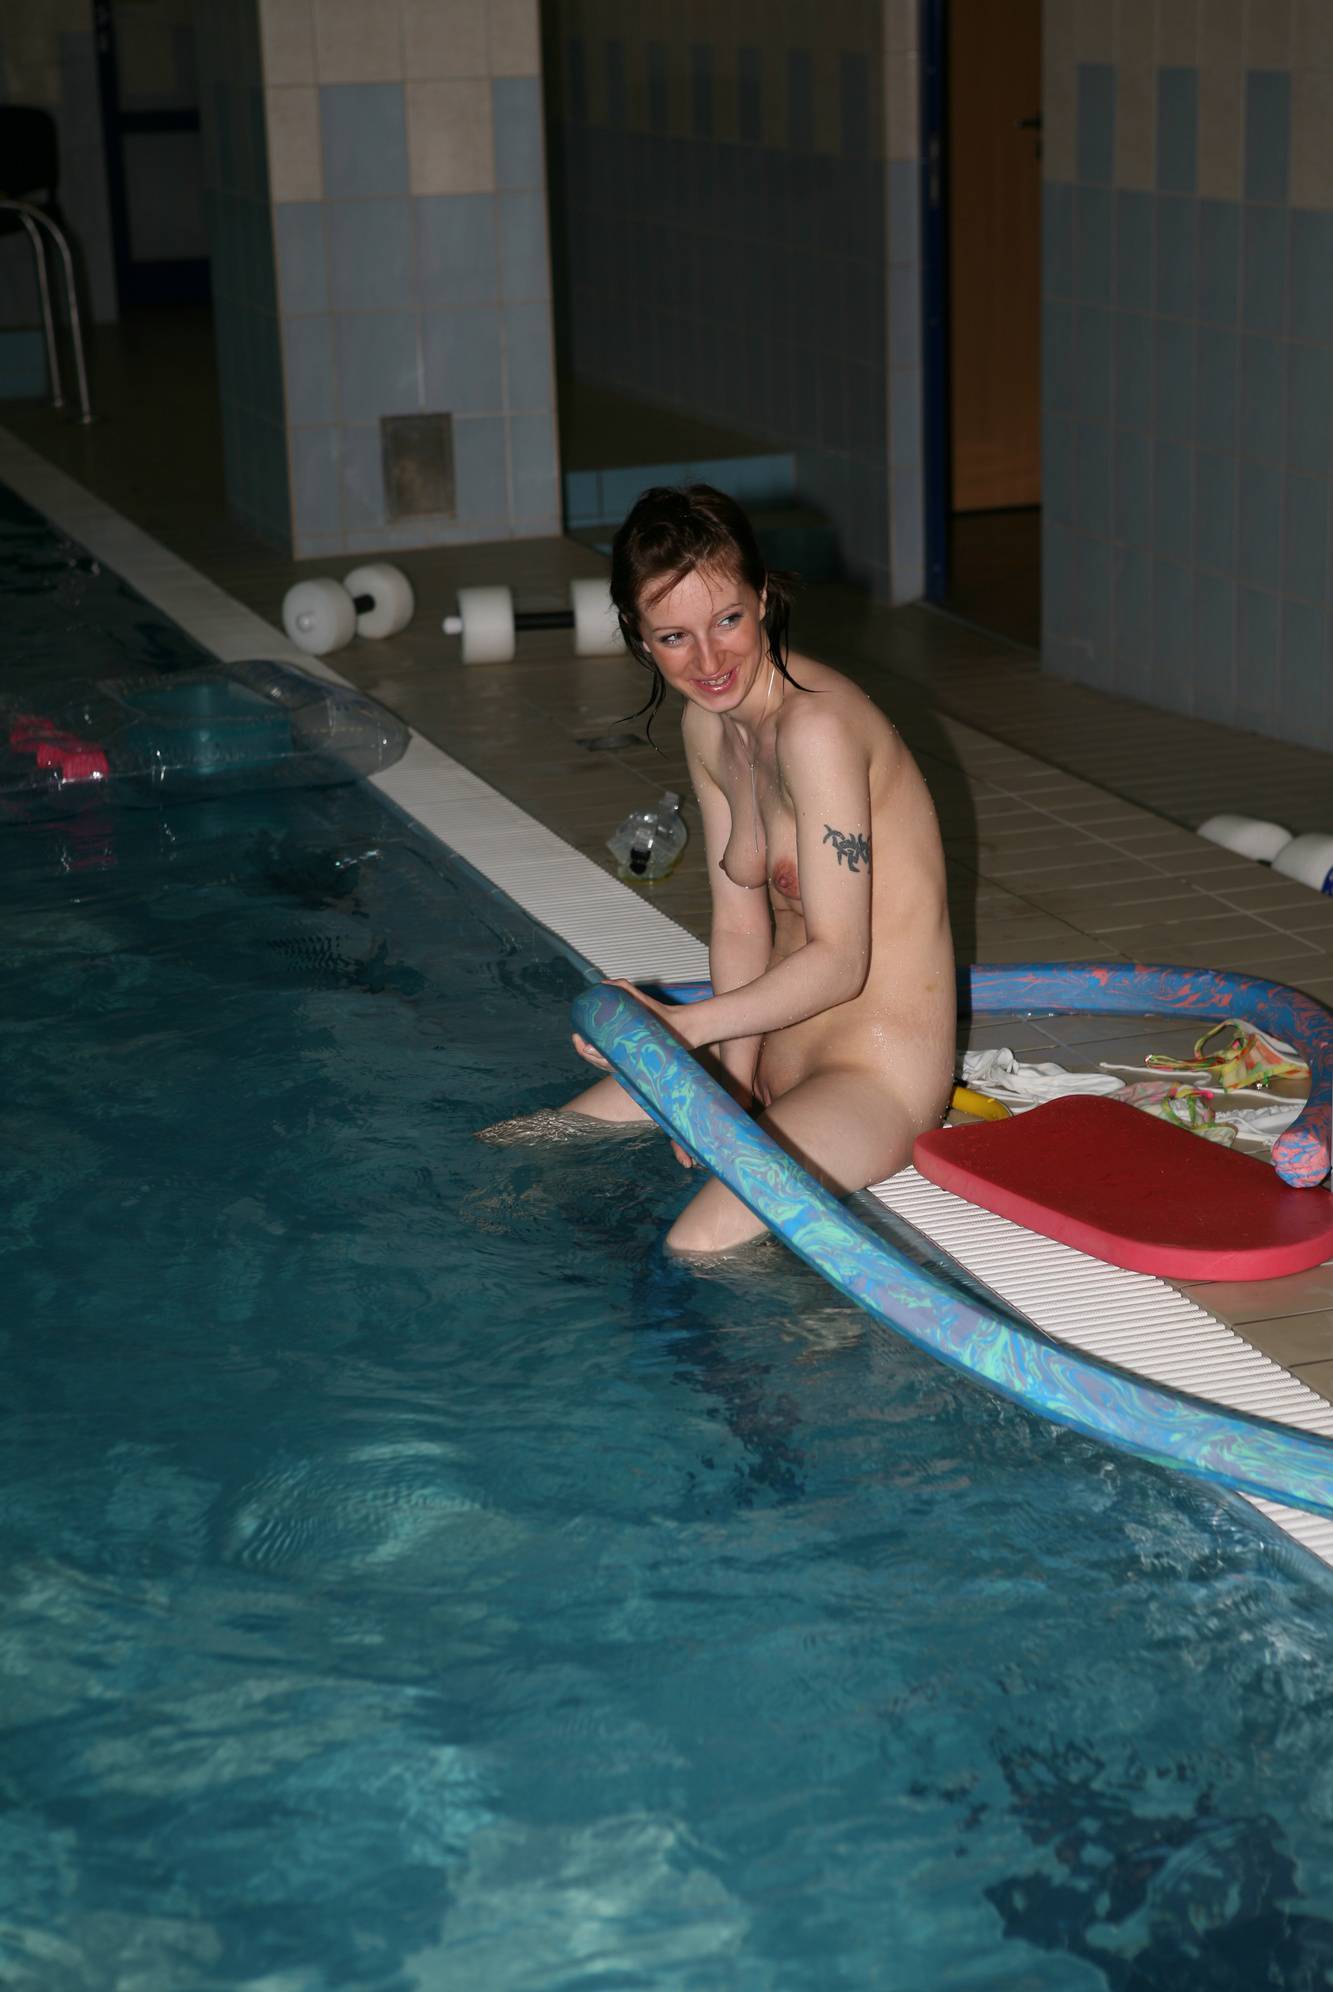 Purenudism Pics Friend's Nude Pool Waters - 1